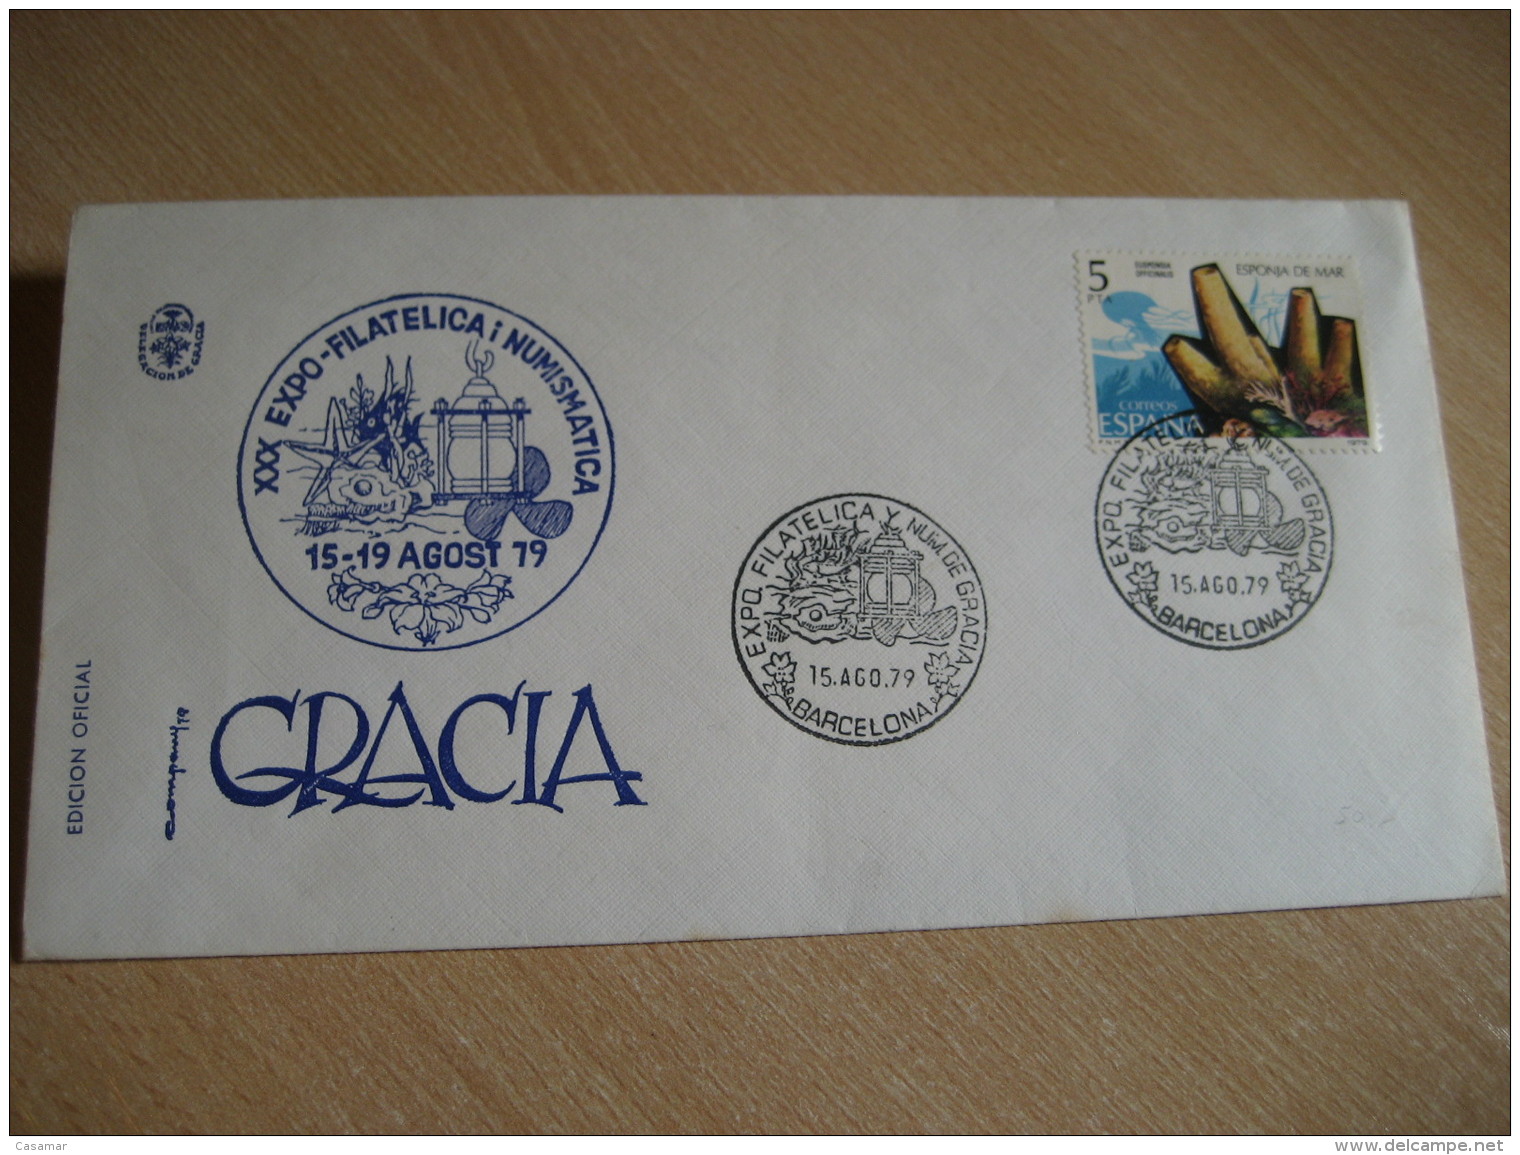 DIVING Expo Gracia BARCELONA 1979 Cancel Cover SPAIN - Plongée